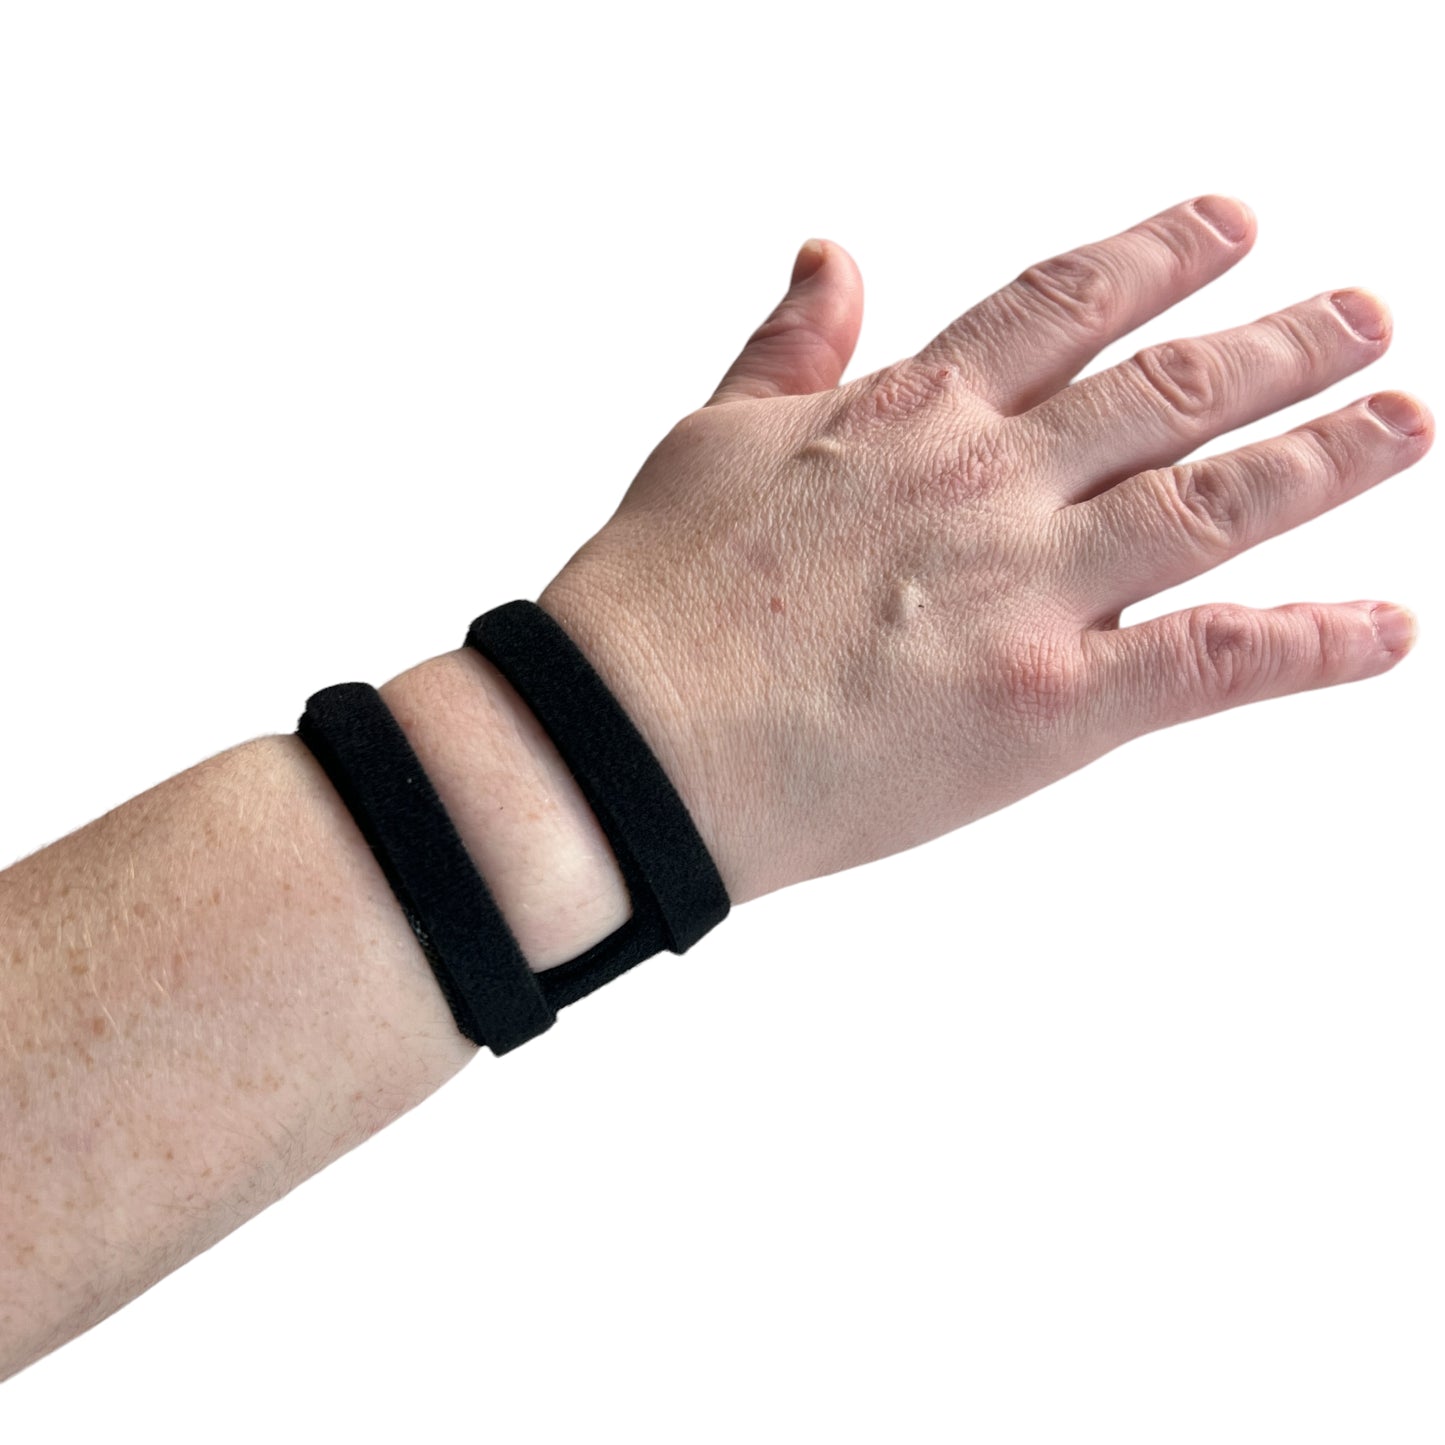 Rehab — TFCC Wrist Brace